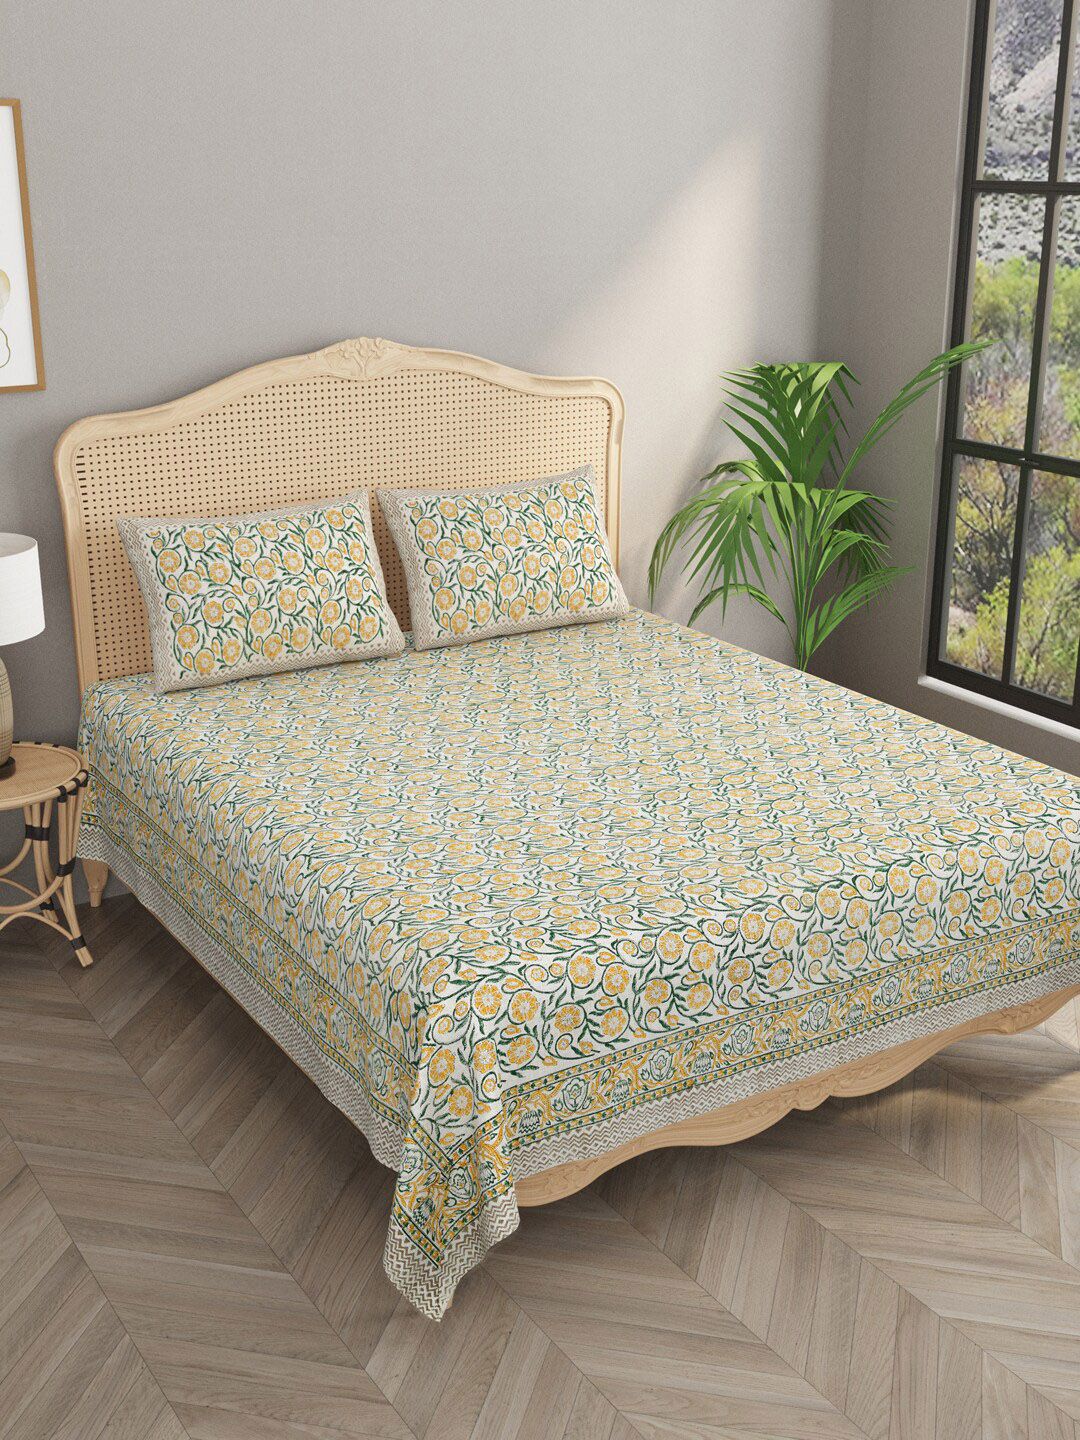 Gulaab Jaipur Handblocked Printed Bed Covers Price in India